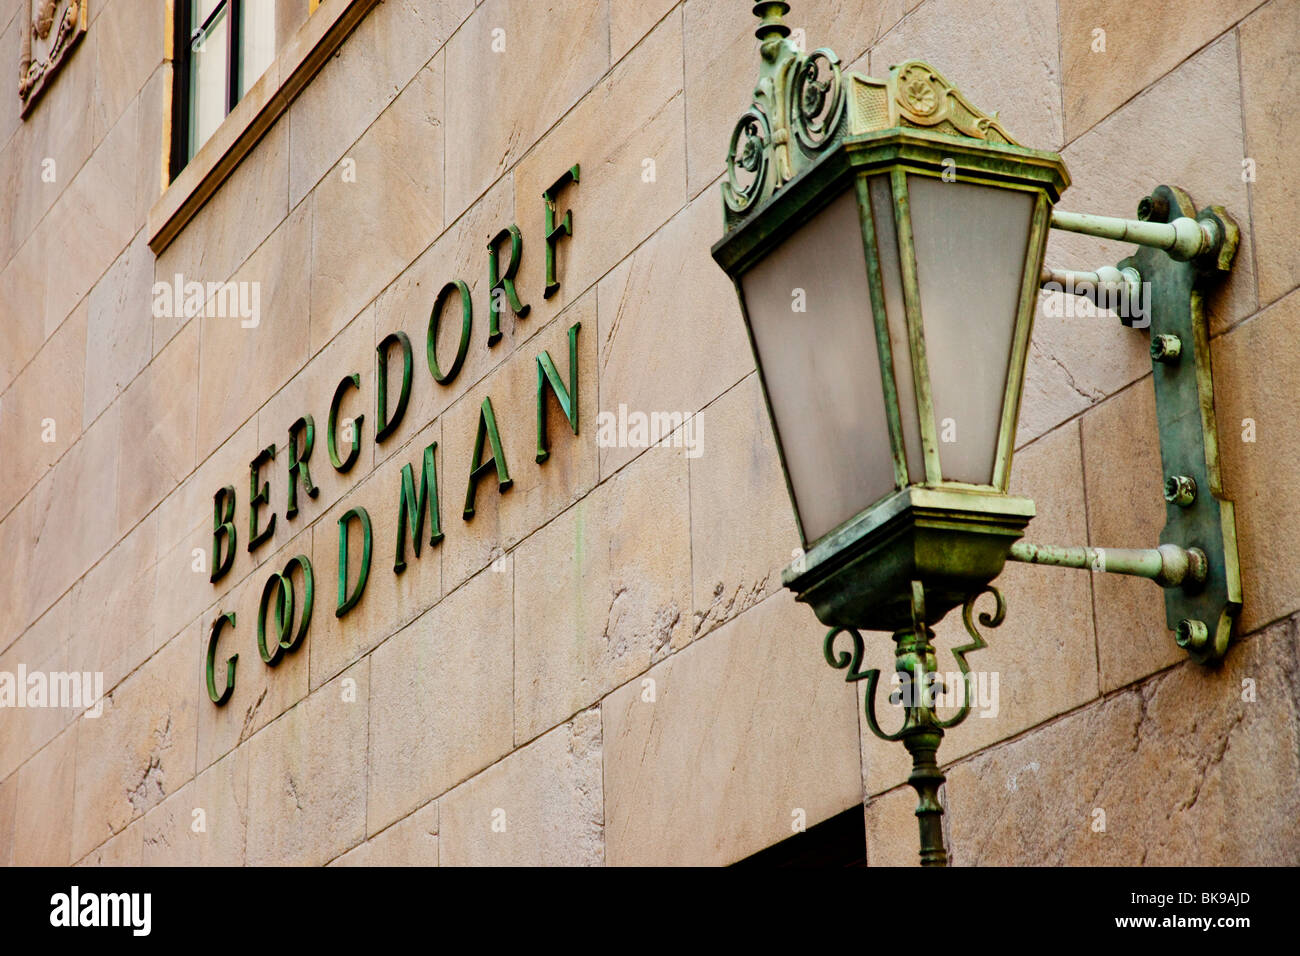 The Bergdorf Goodman department store in New York – Stock Editorial Photo ©  zhukovsky #174612970